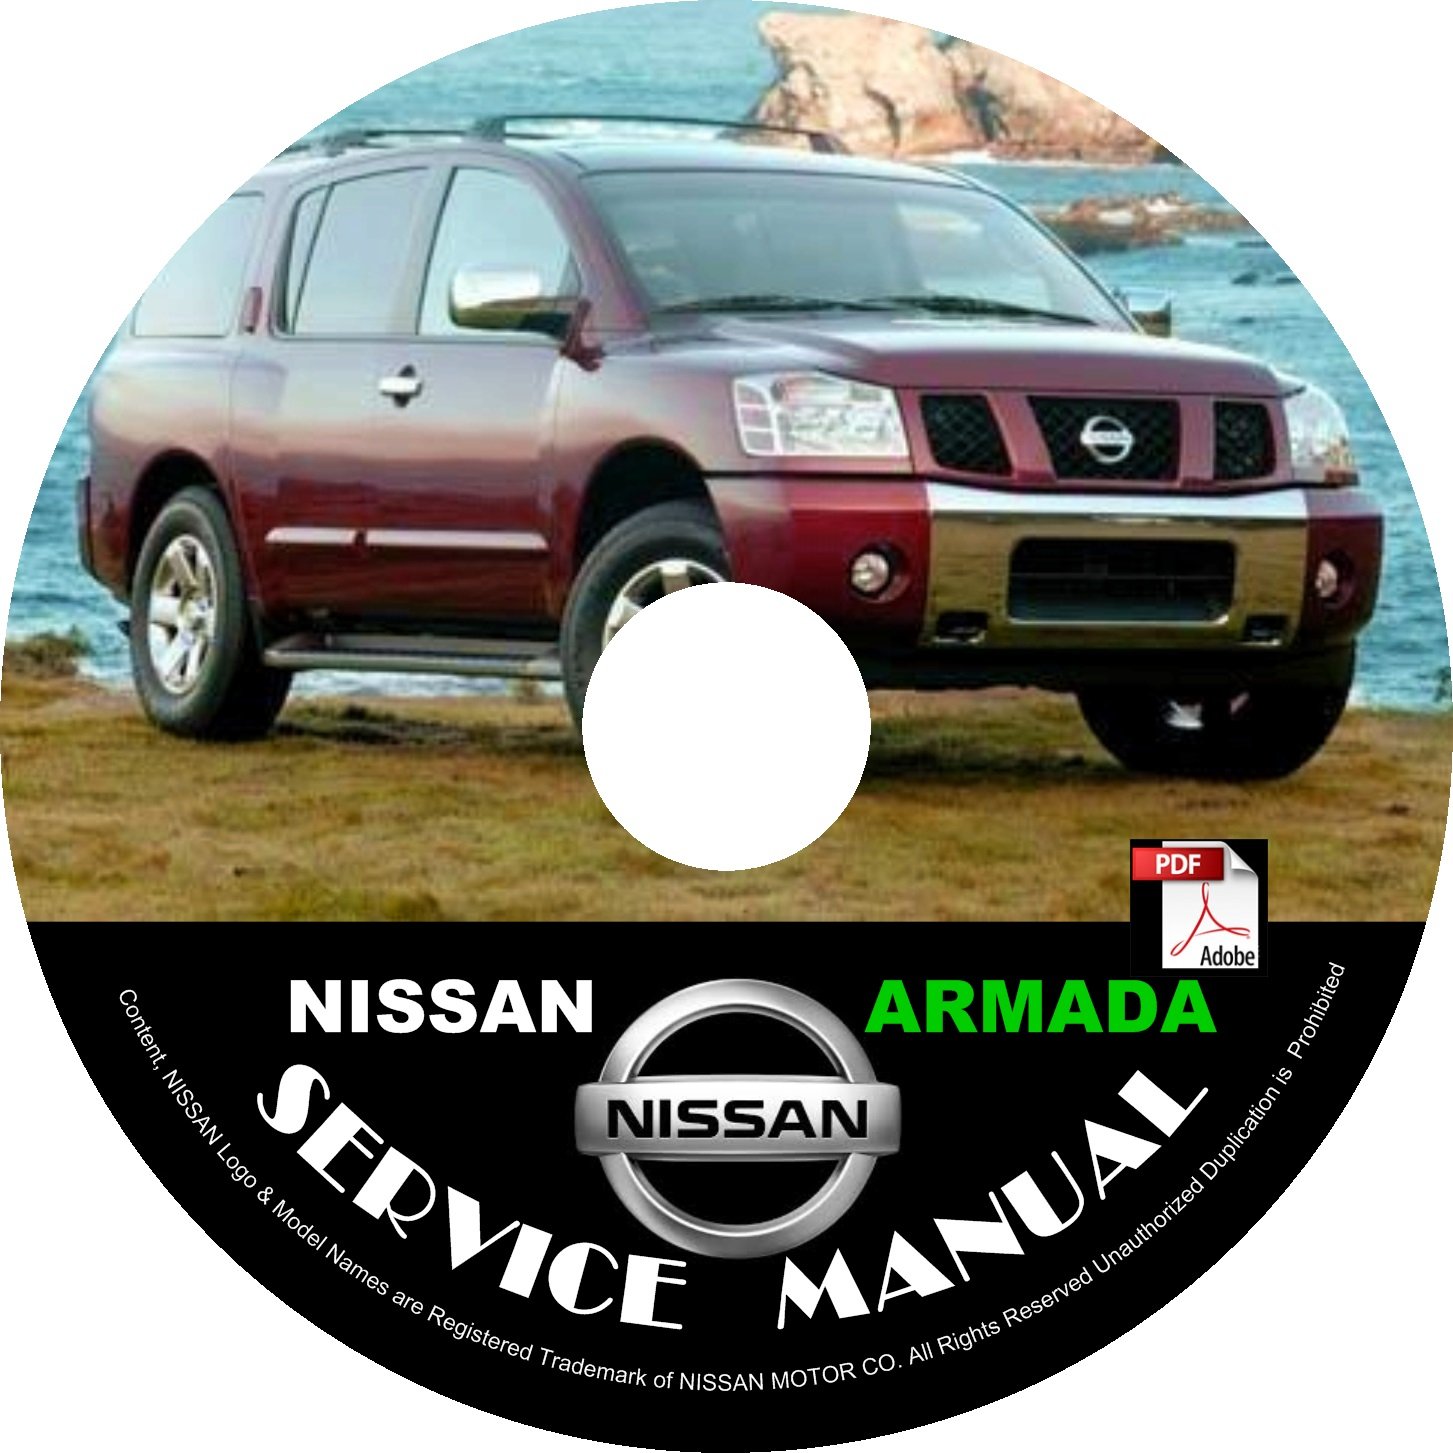 2006 Nissan Armada Factory Service Repair Shop Manual on CD